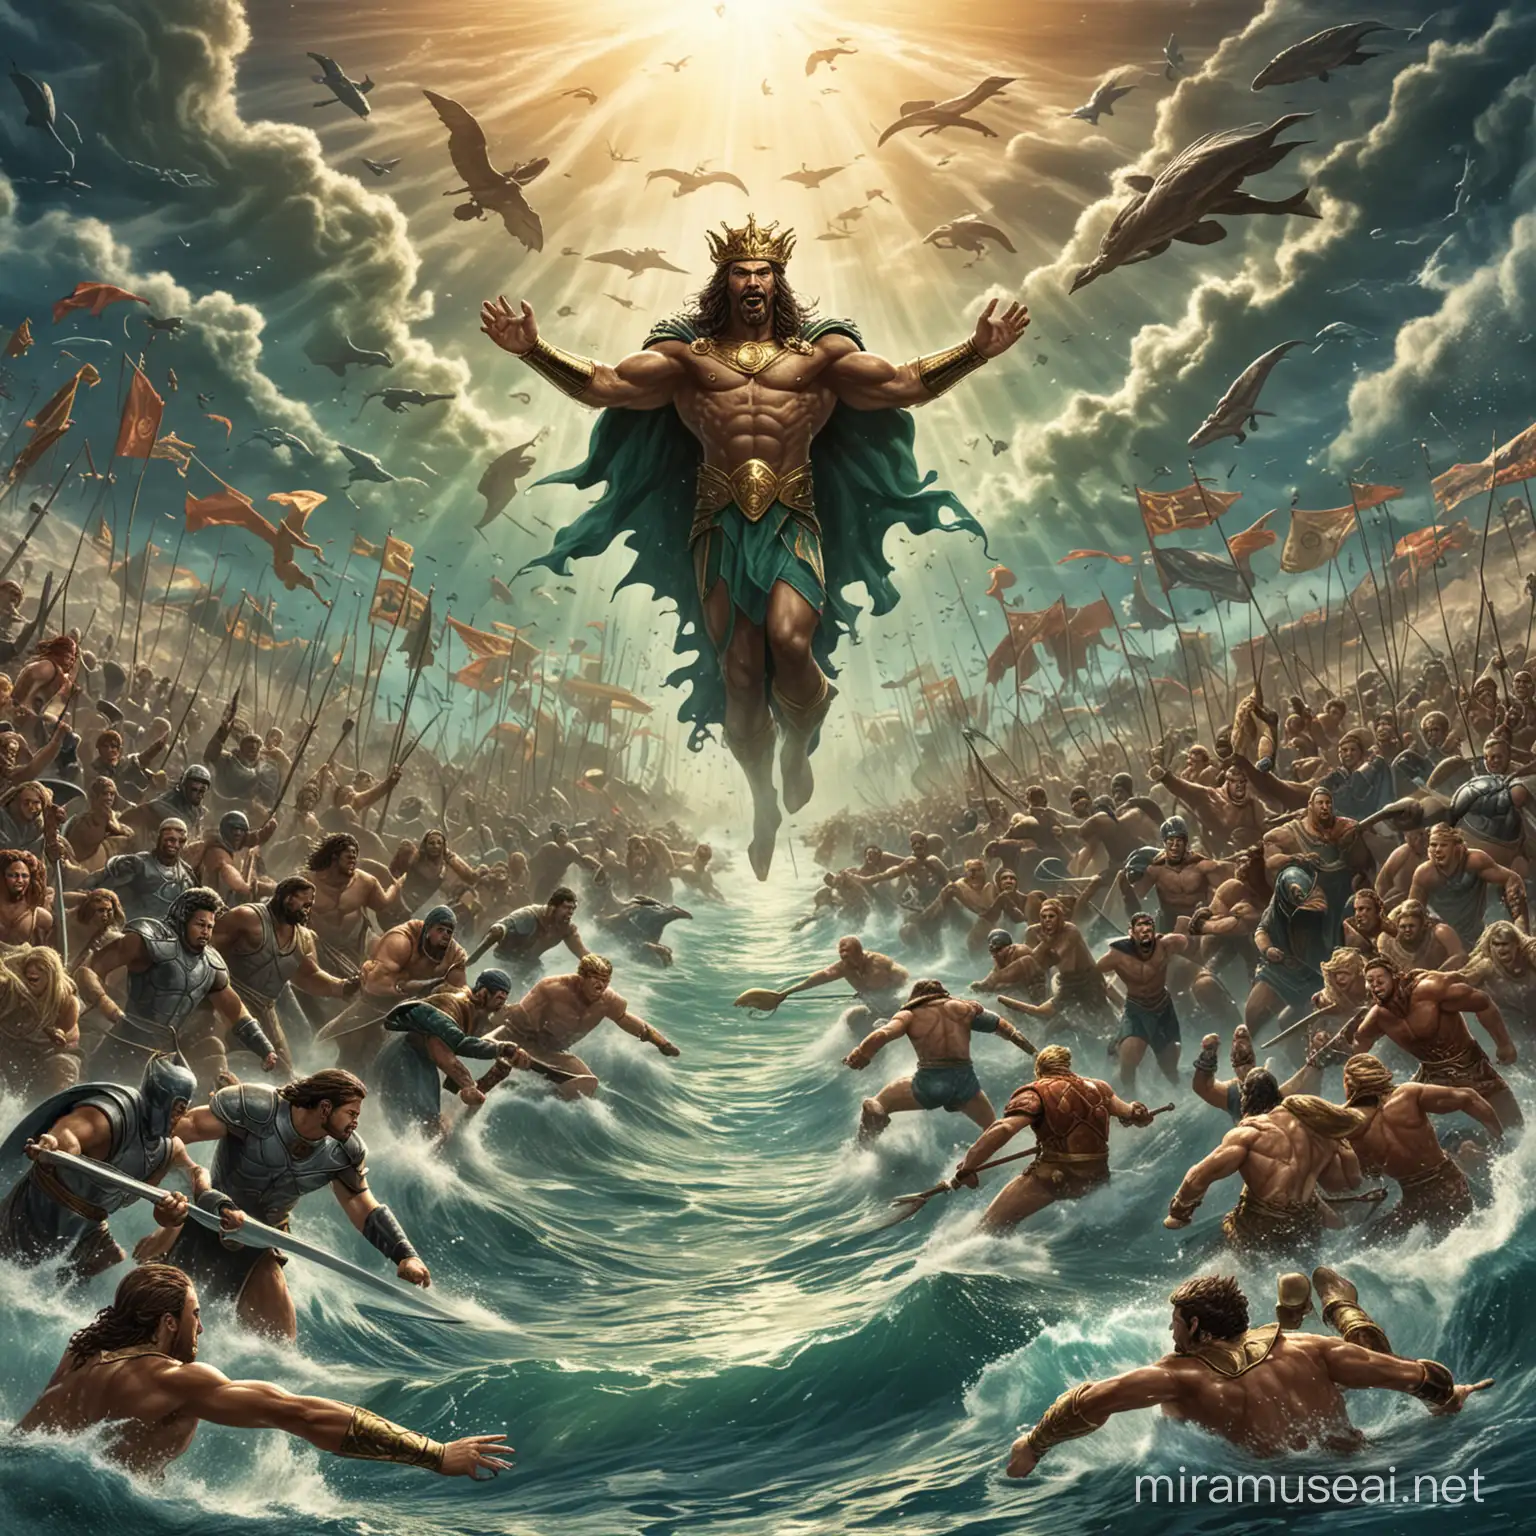 Epic Battle War of the King of Atlantis